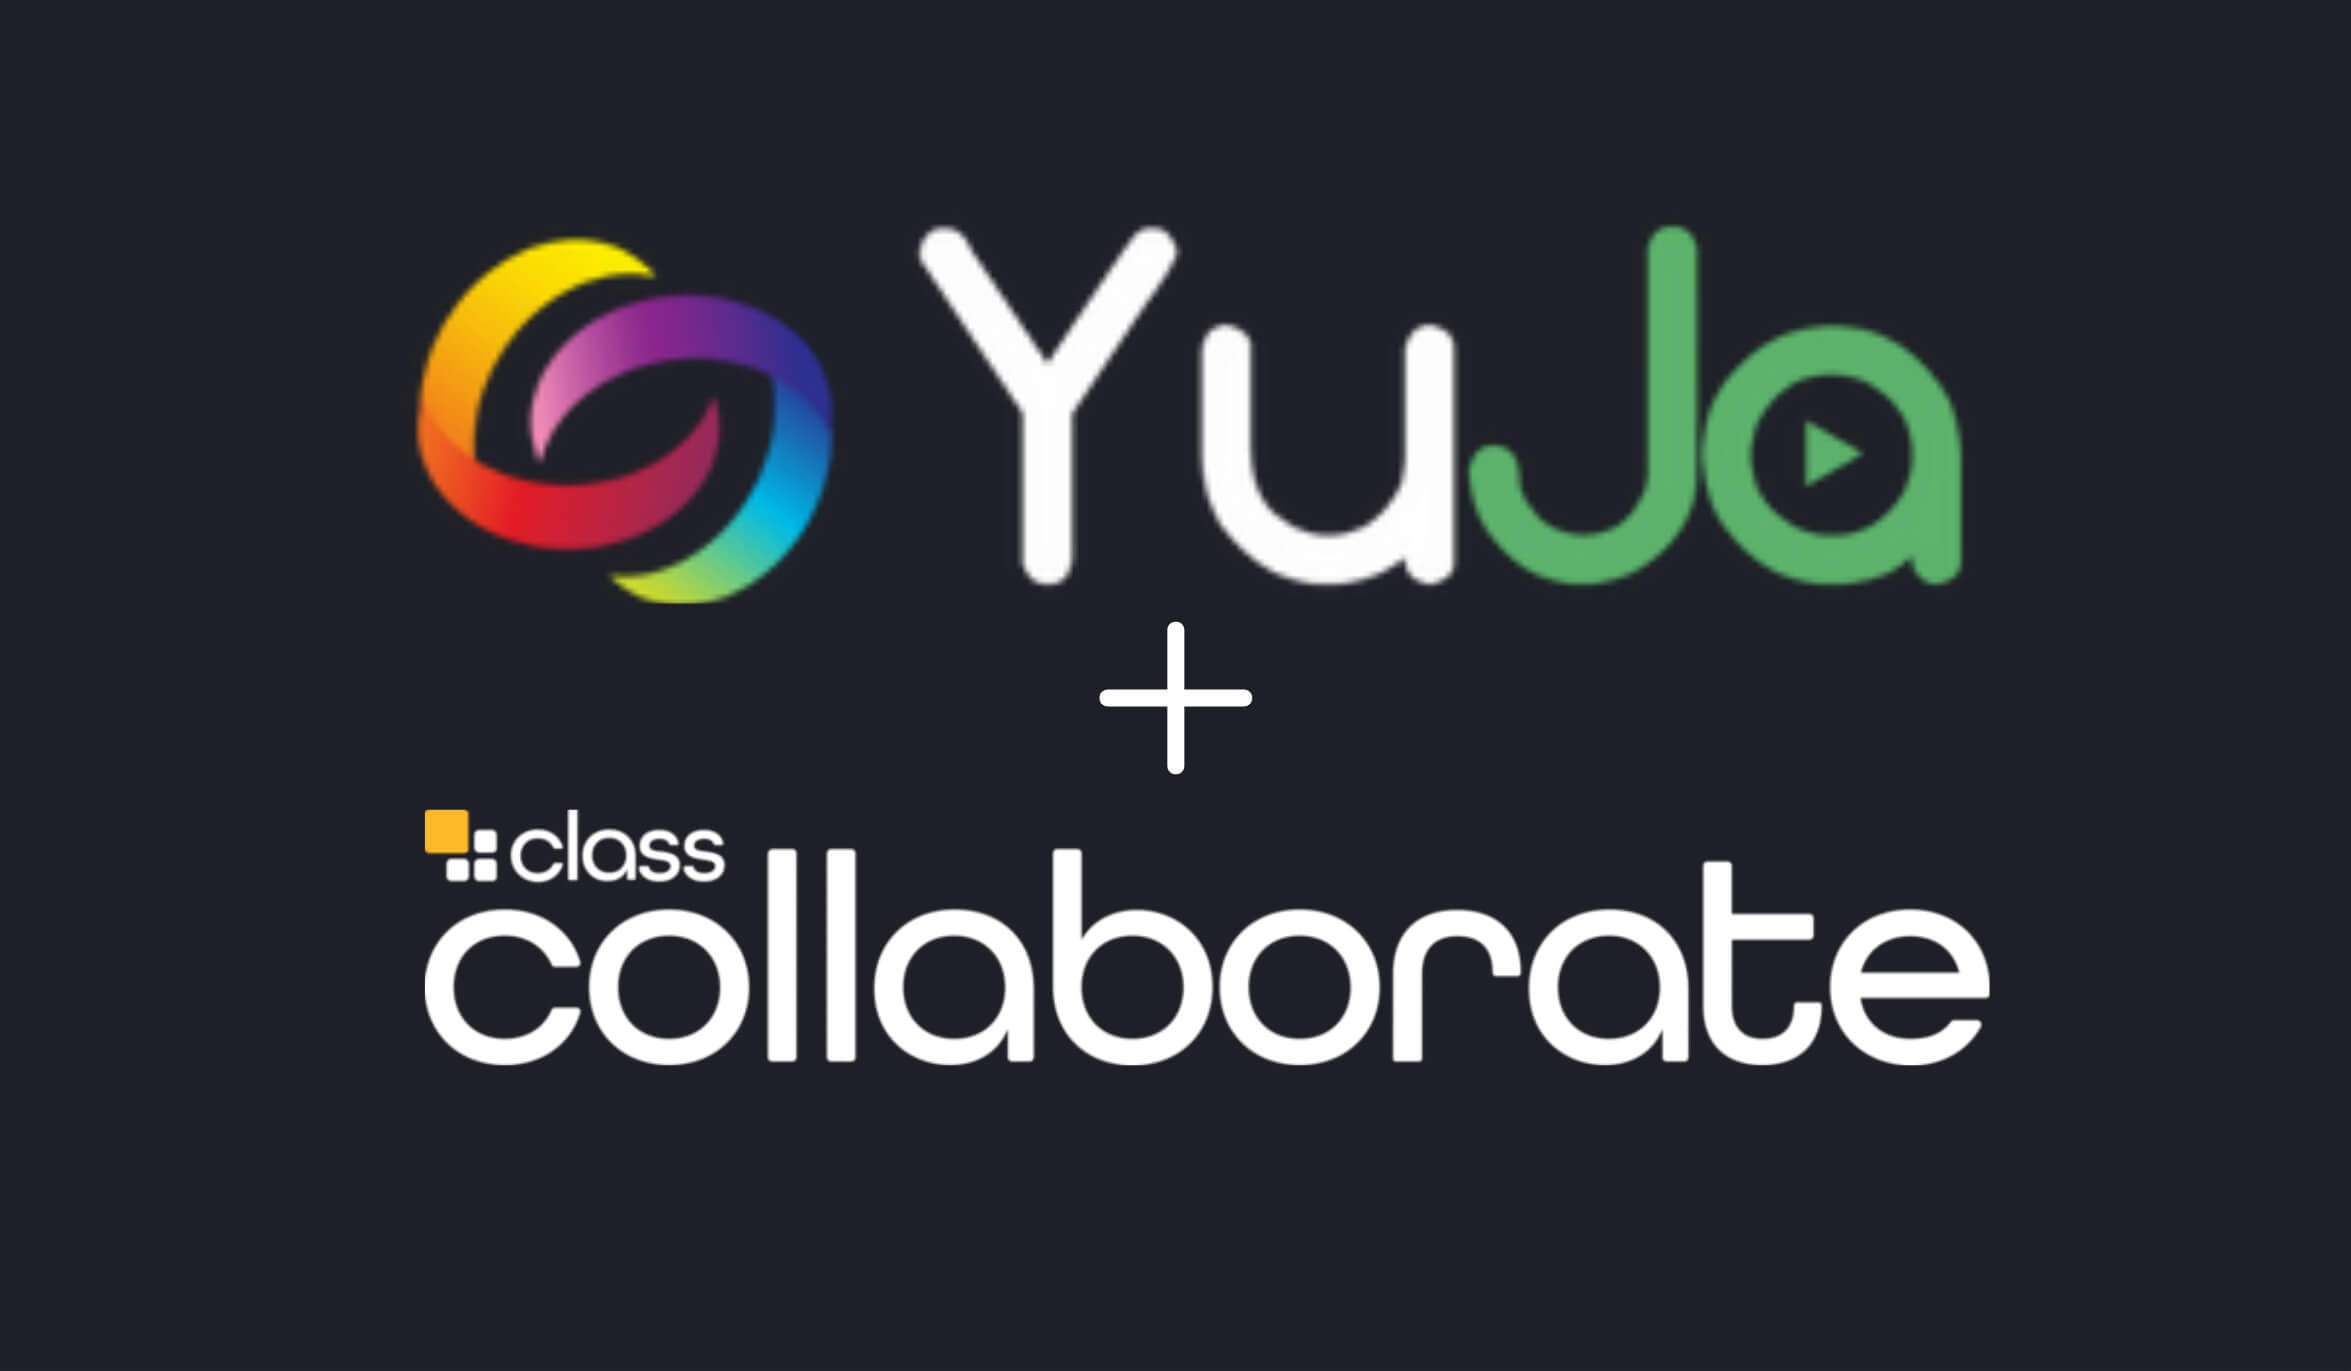 YuJa + Class Collaborate logos